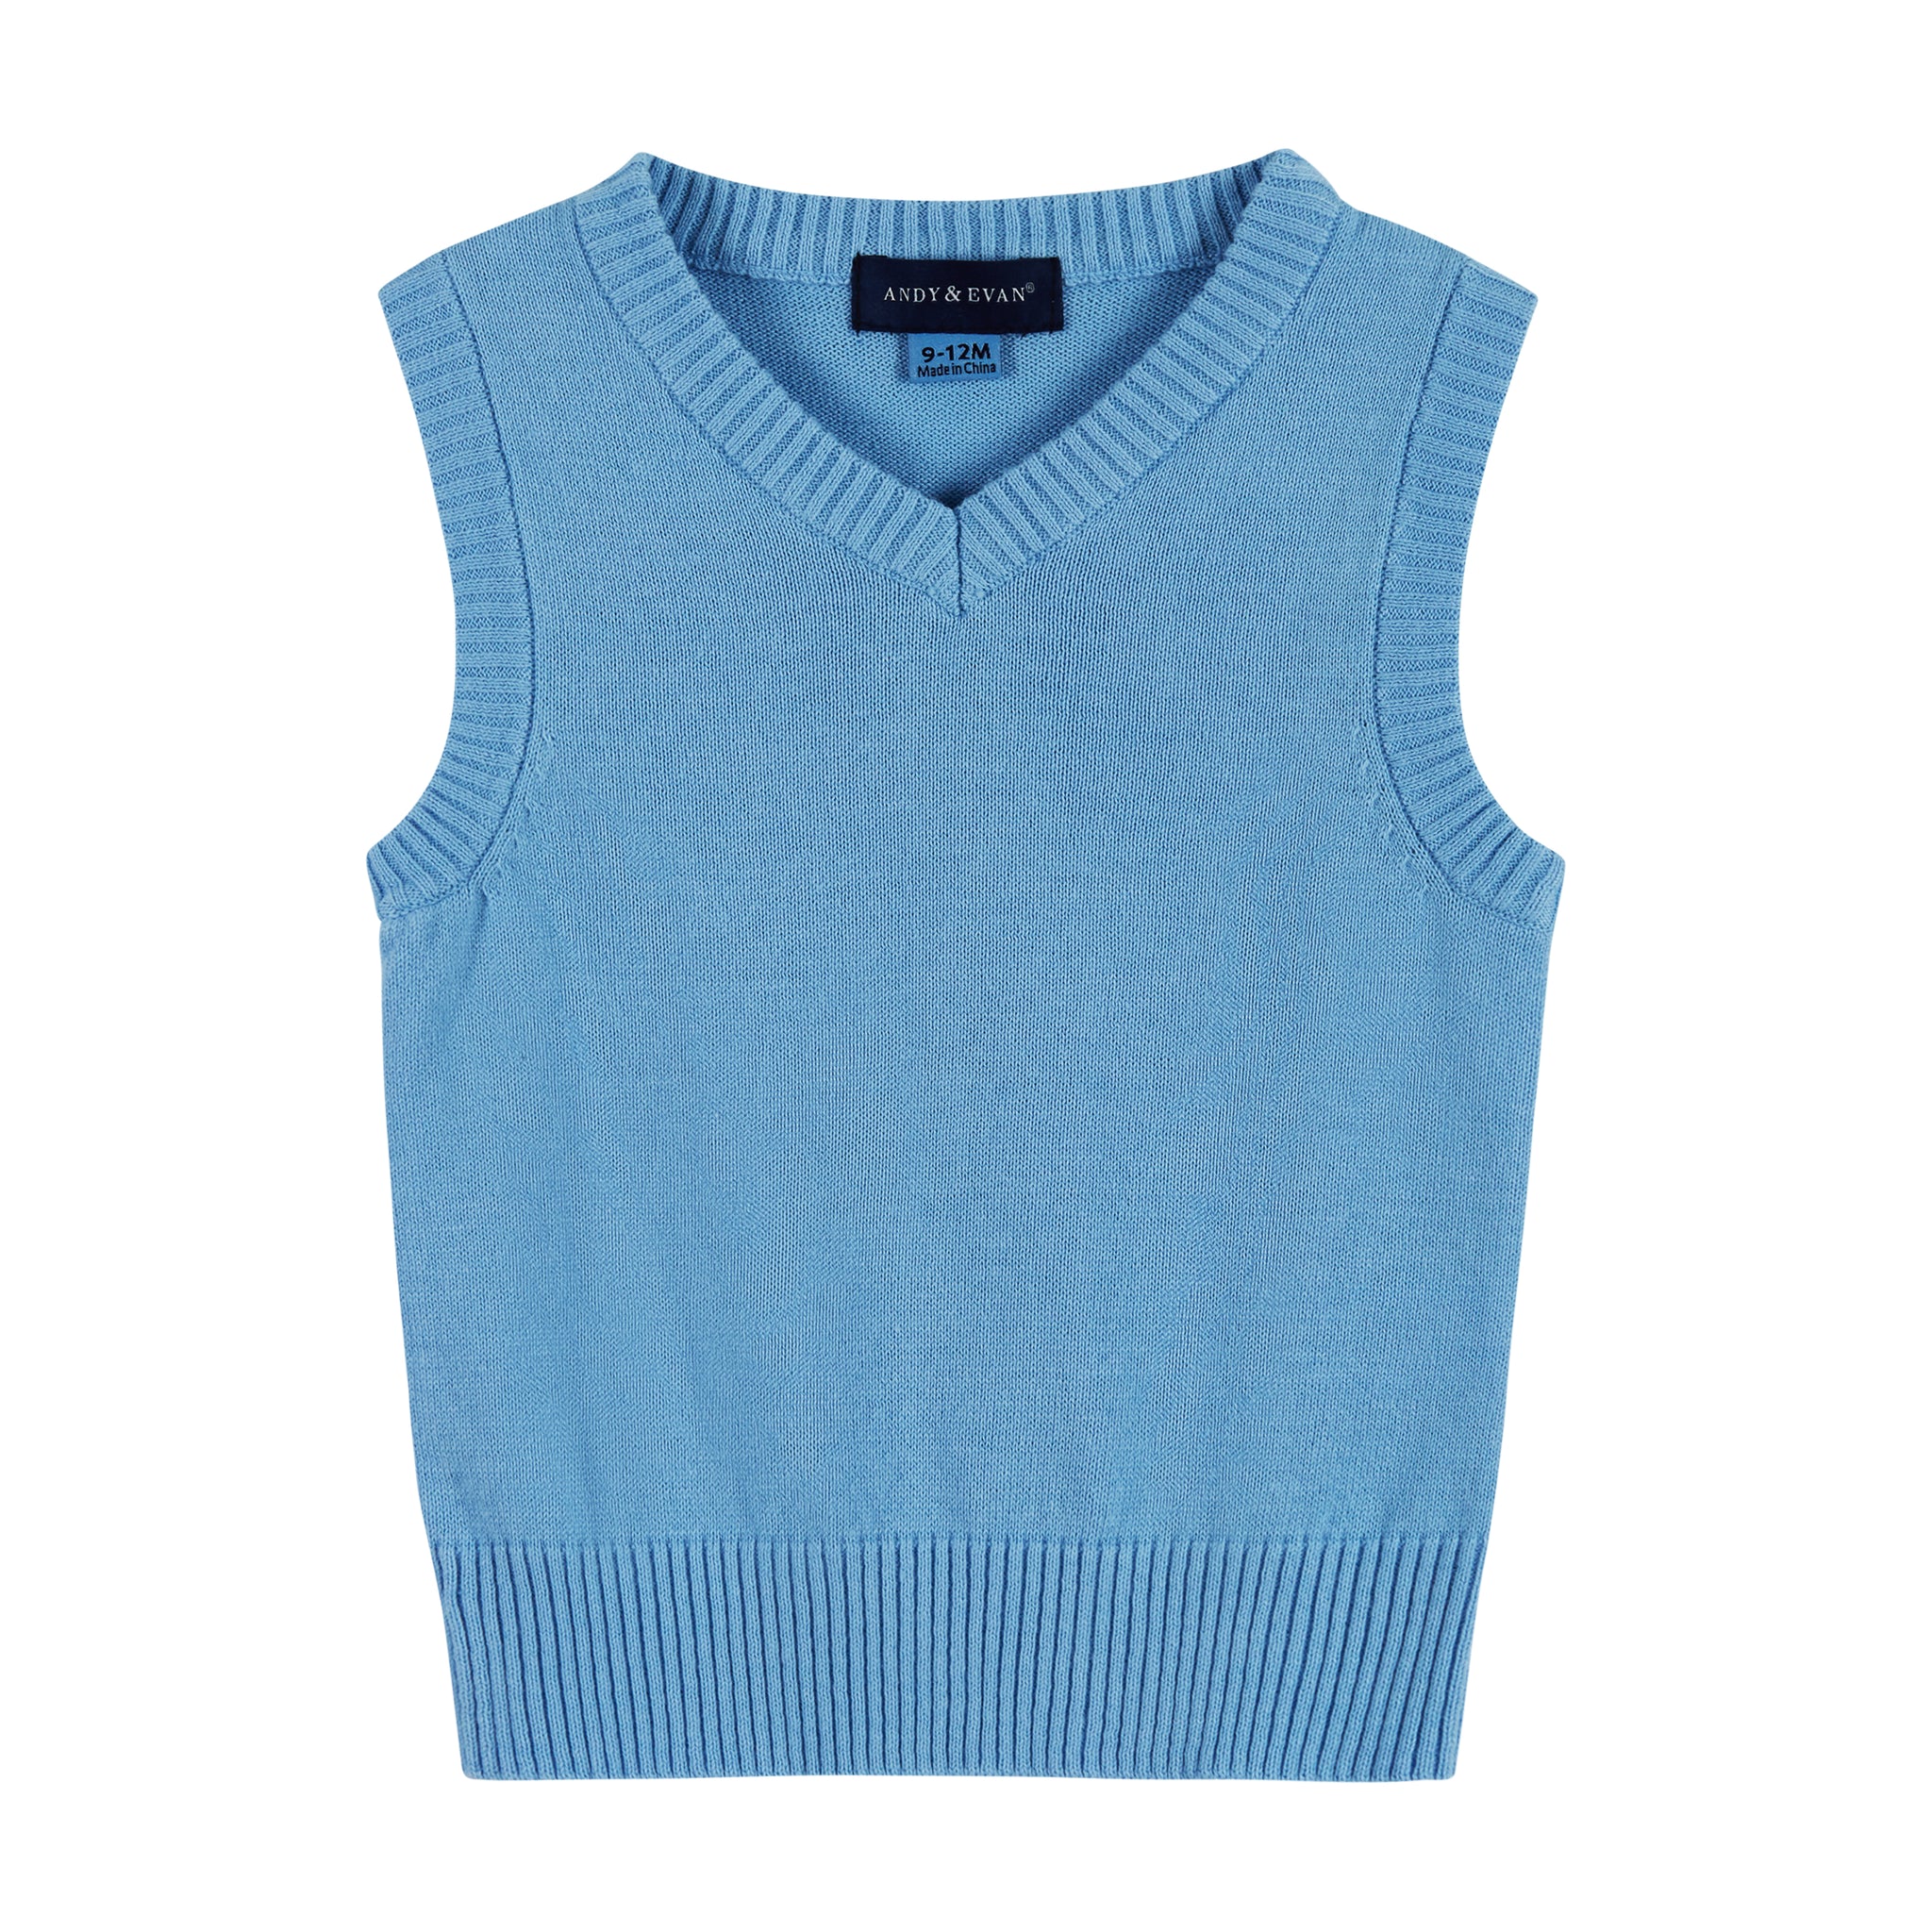 Andy & Evan Baby Boys Sky Blue Sweater Vest Set